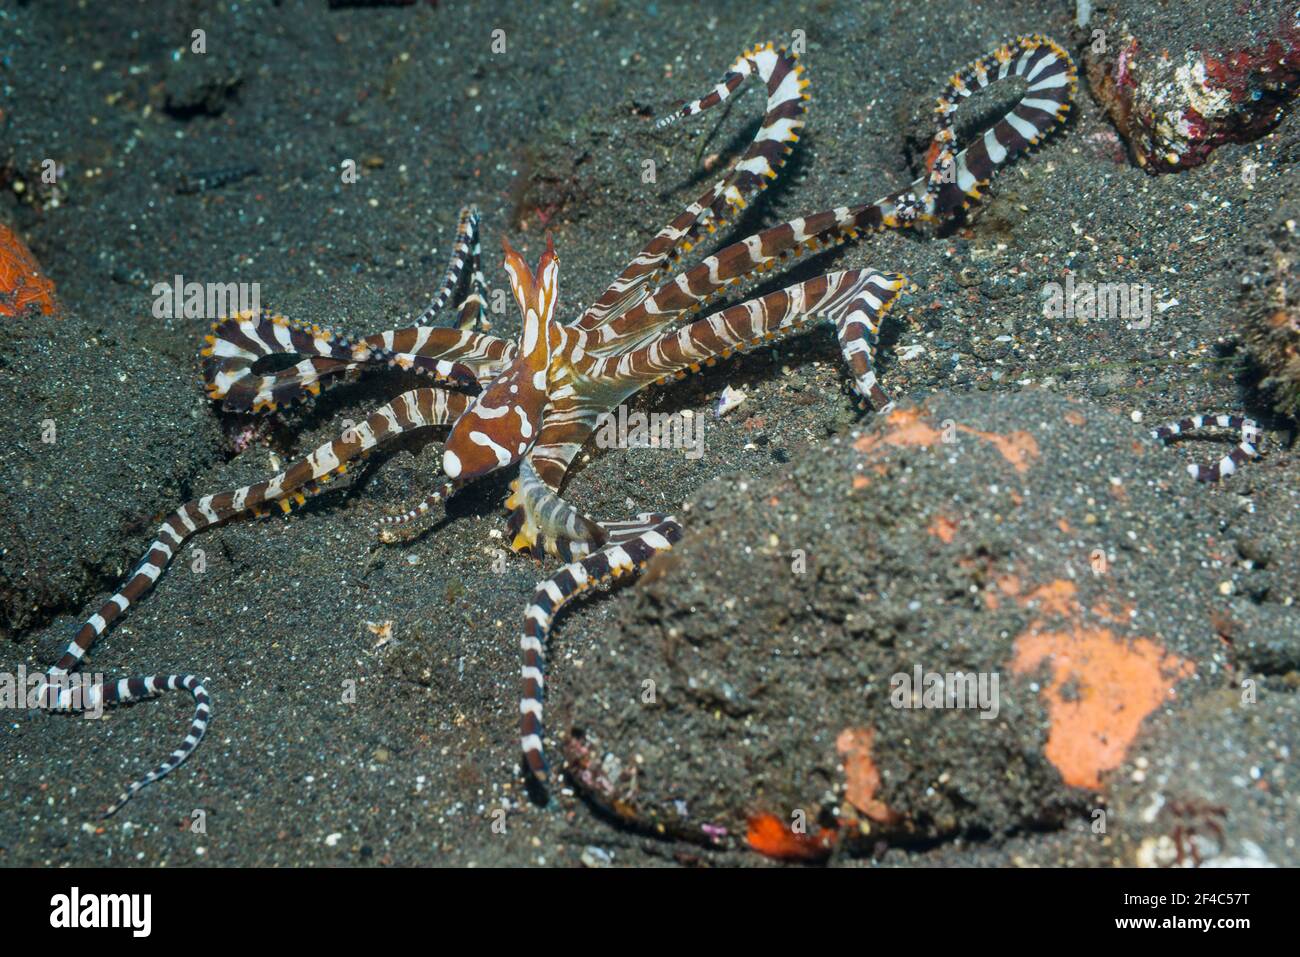 Wunderpus octopus [Wunderpus photogenicus].  Tulamben, Bali, Indonesia. Stock Photo